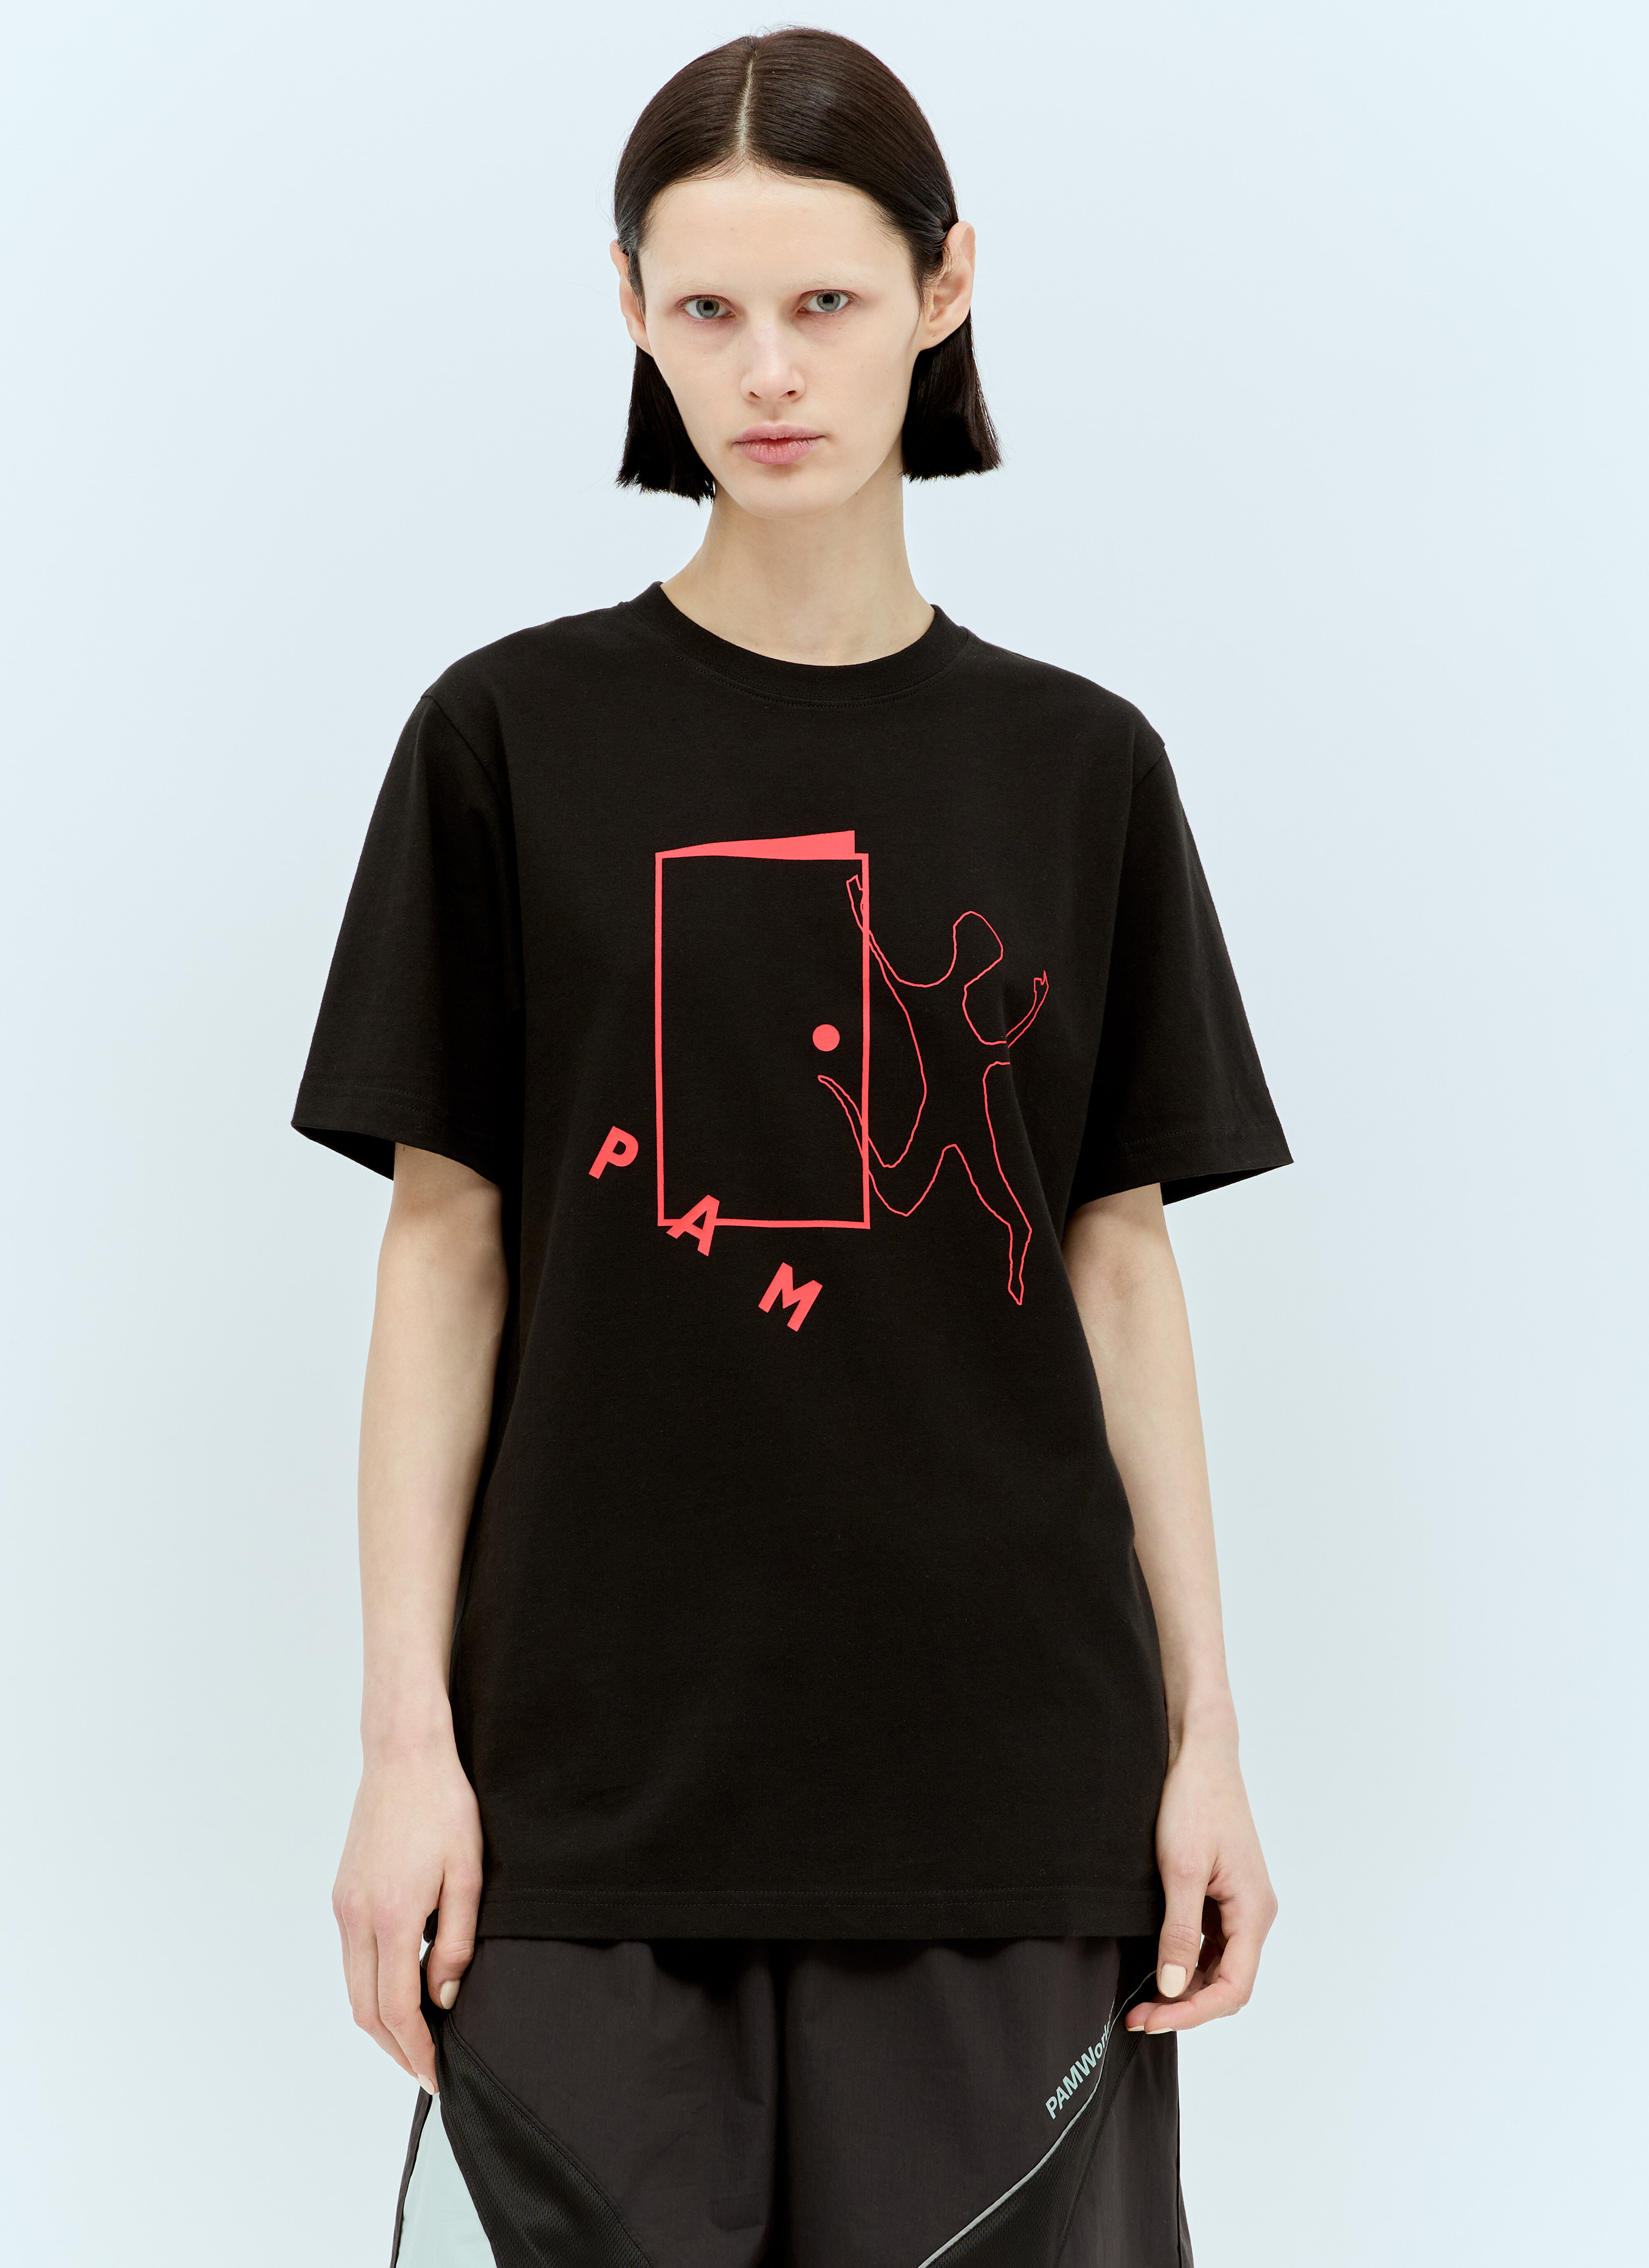 Jean Paul Gaultier x Shayne Oliver Open Doors T-Shirt Black jps0257004